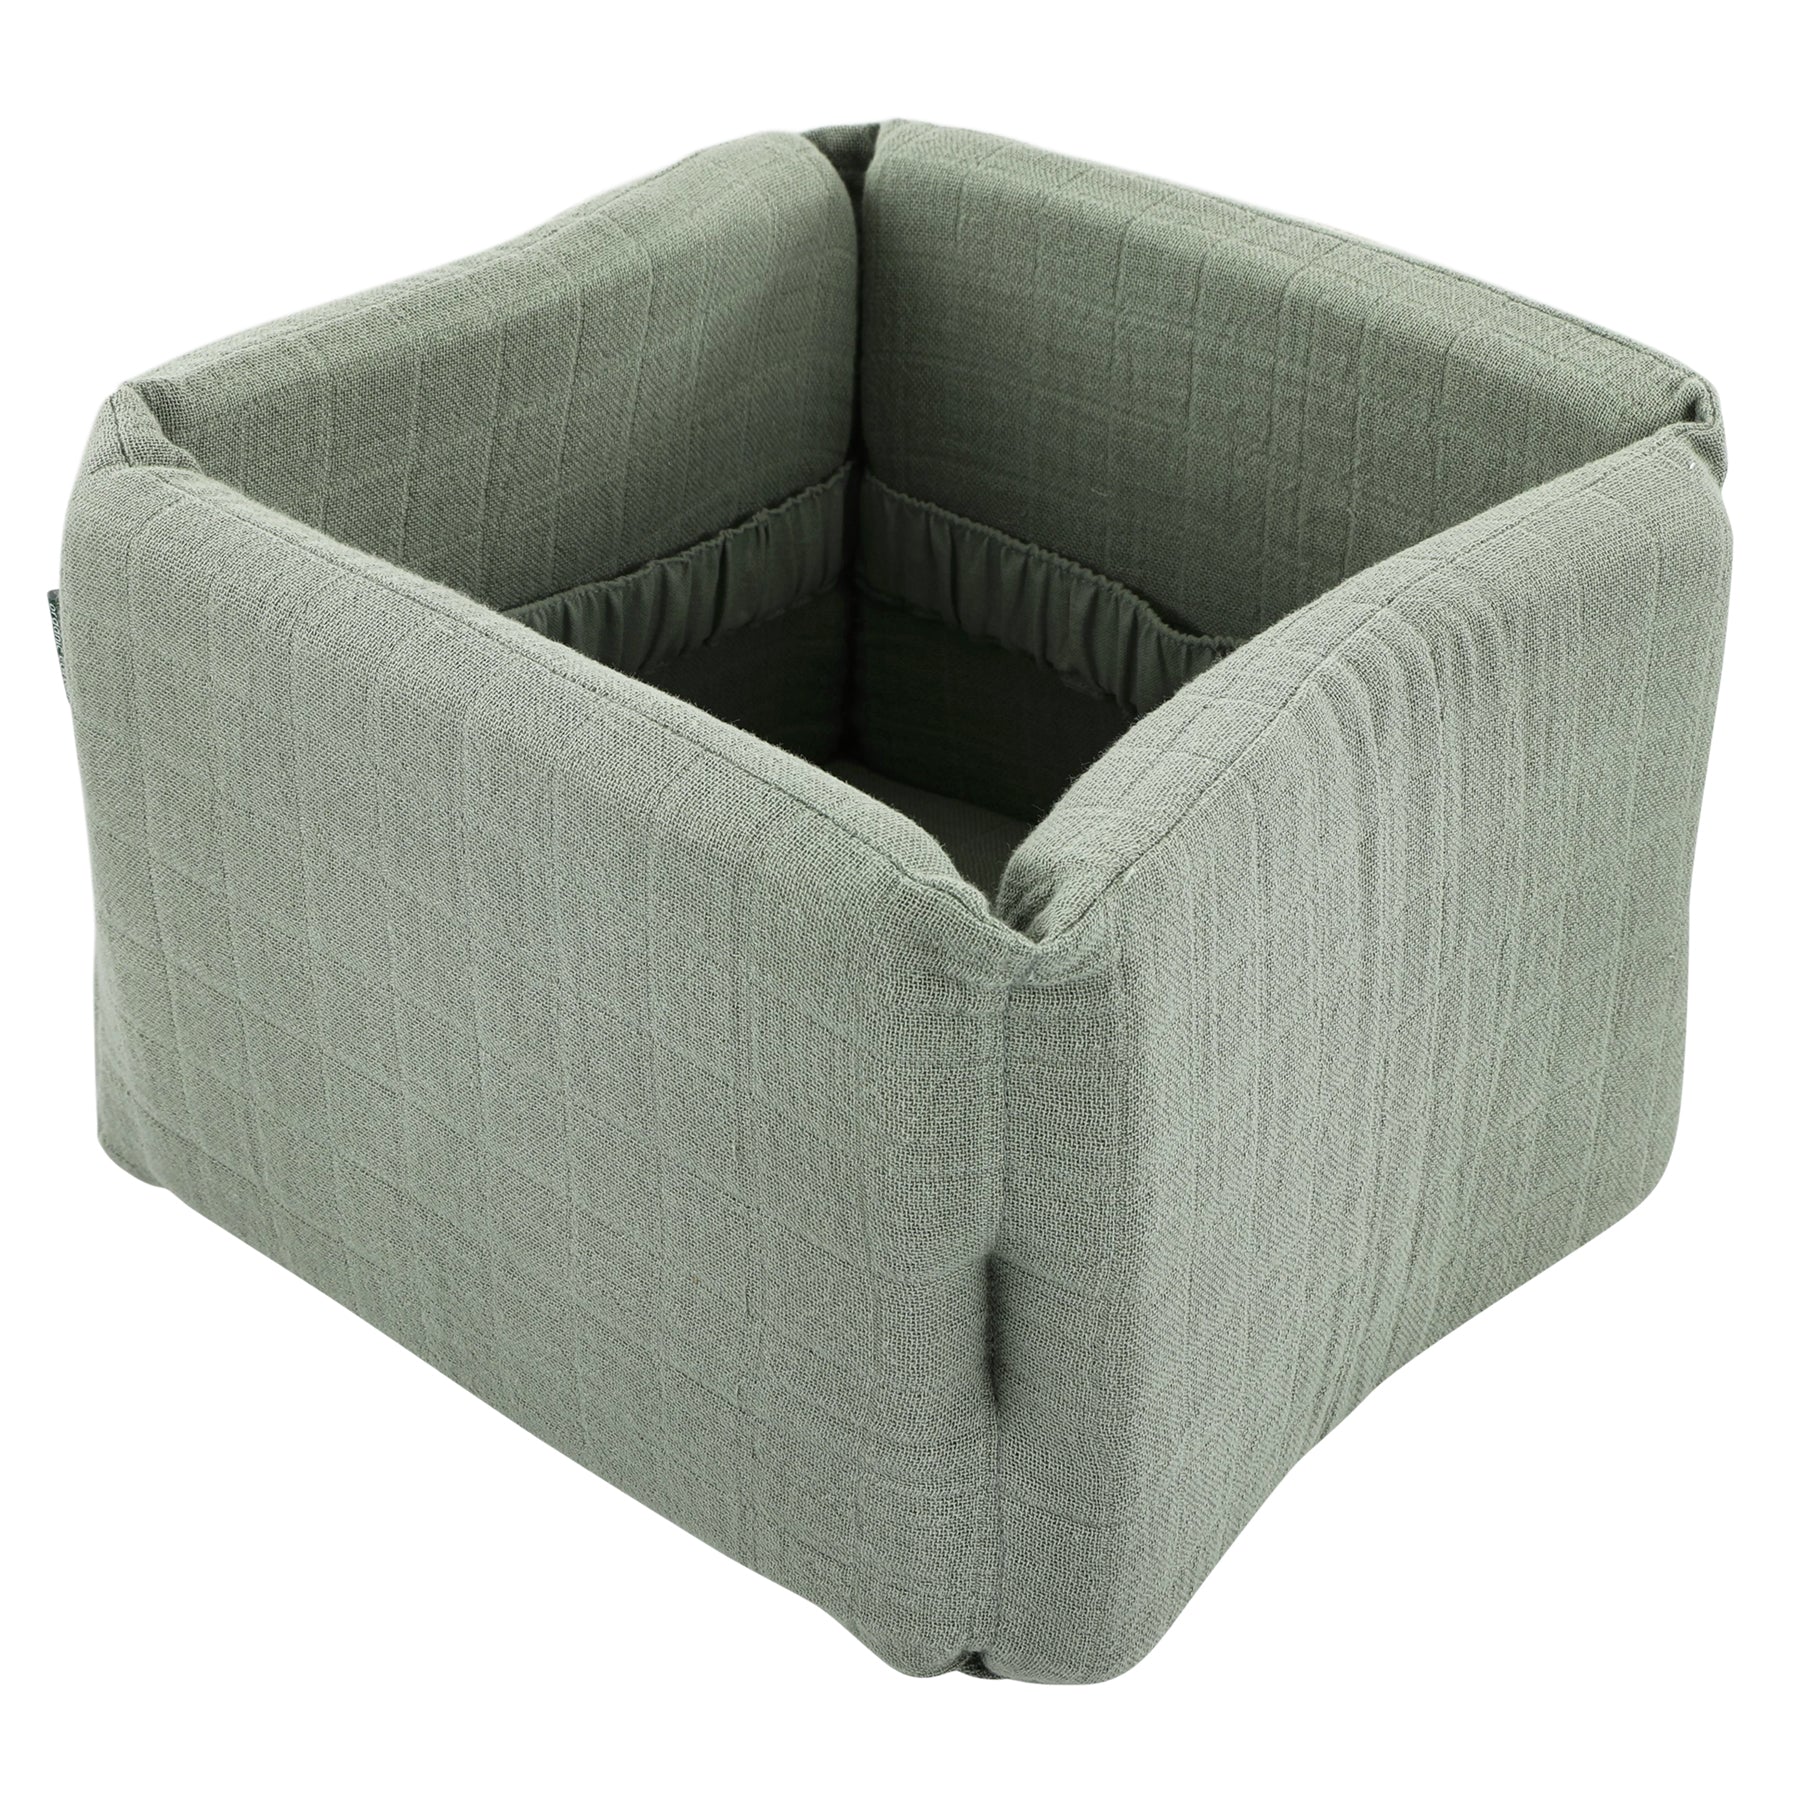 Pale green fabric storage basket